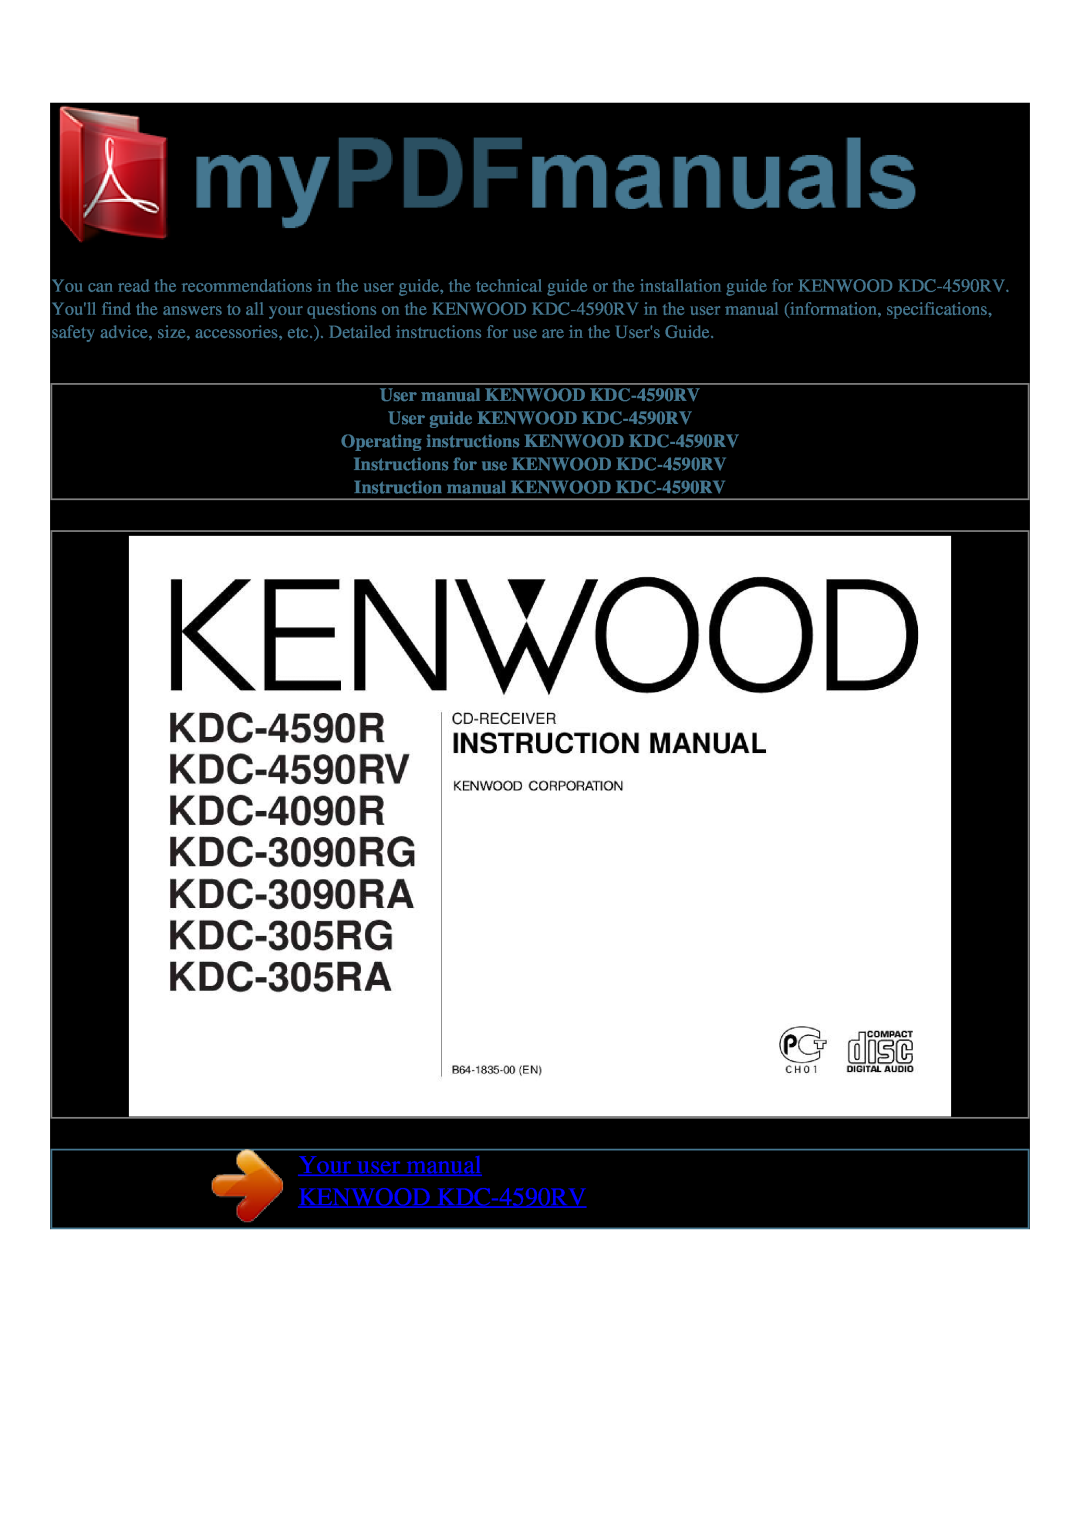 Kenwood KDC-305RG, KDC-3090RG user manual Your user manual KENWOOD KDC-4590RV, Operating instructions KENWOOD KDC-4590RV 